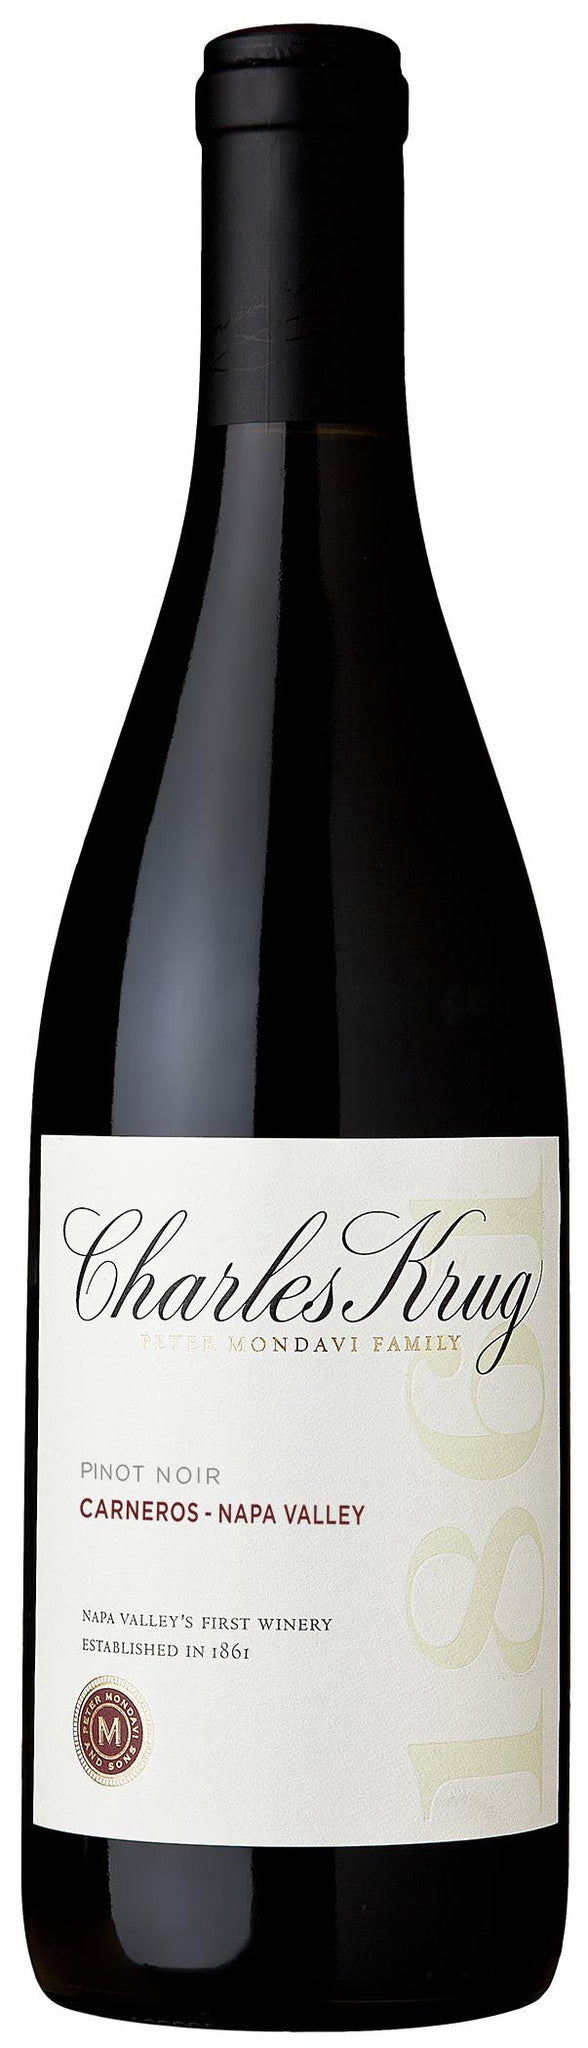 Charles Krug Carneros Pinot Noir